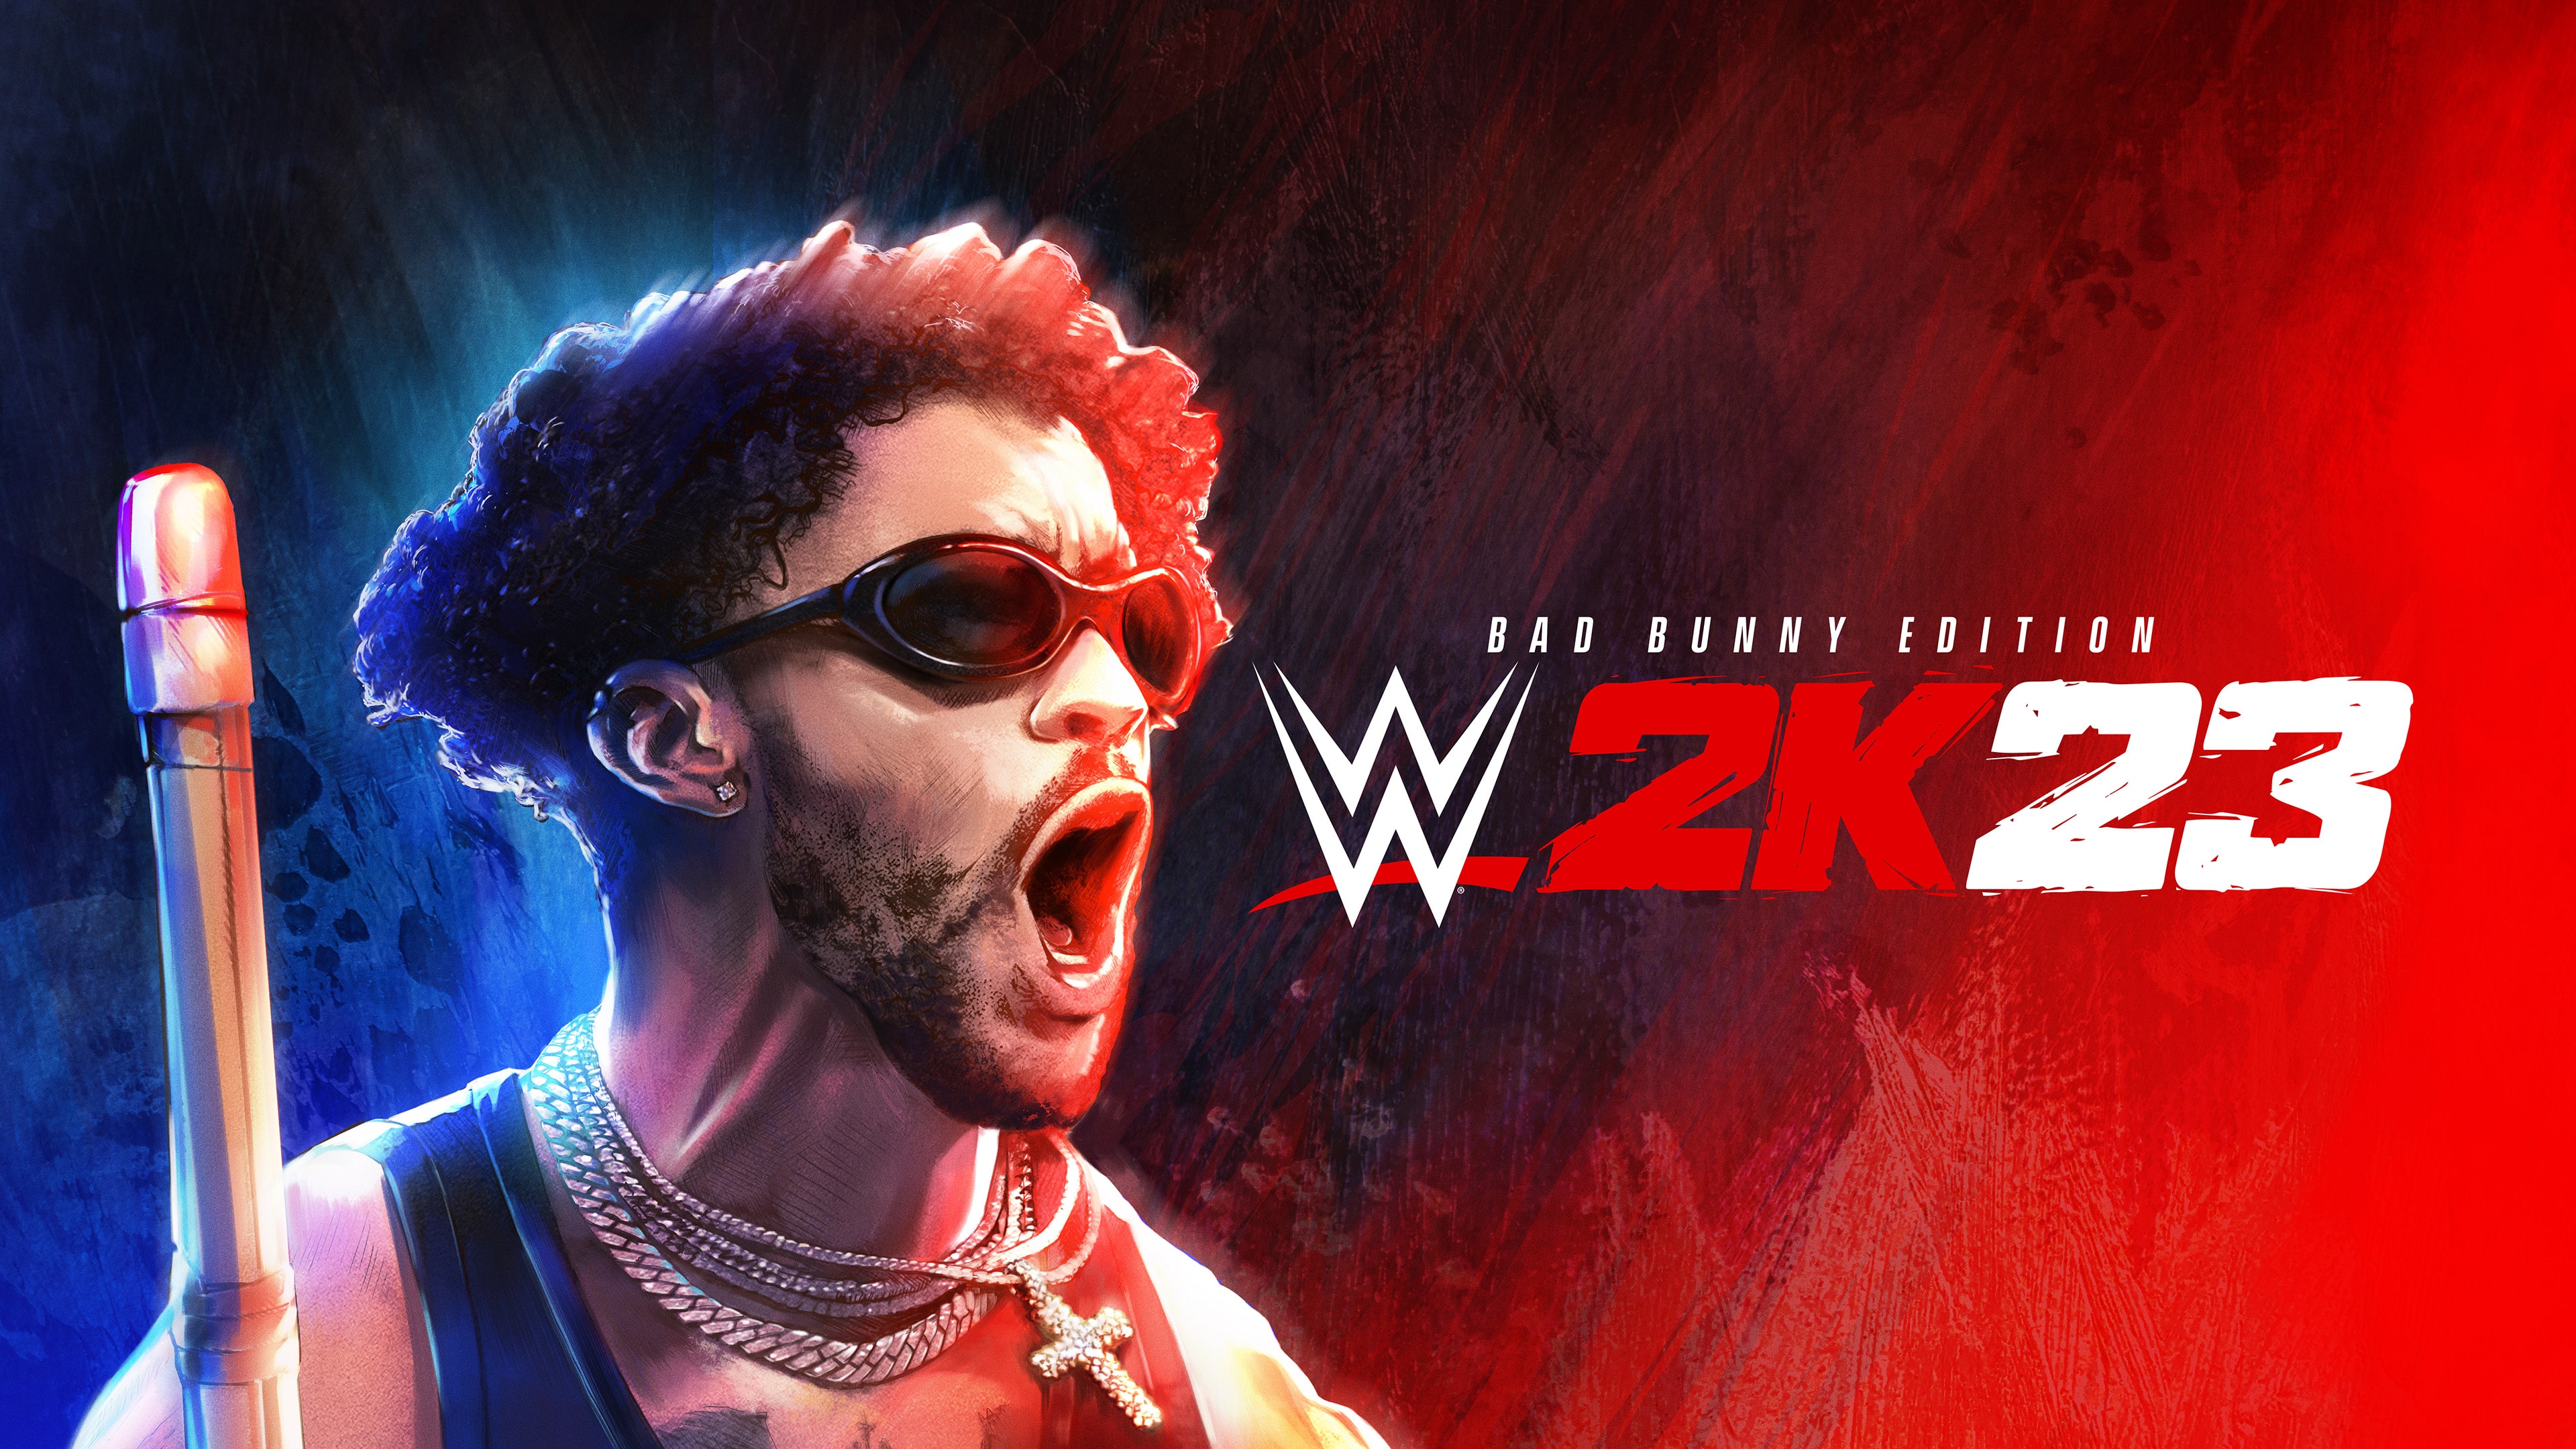 WWE 2K23 Bad Bunny-Edition